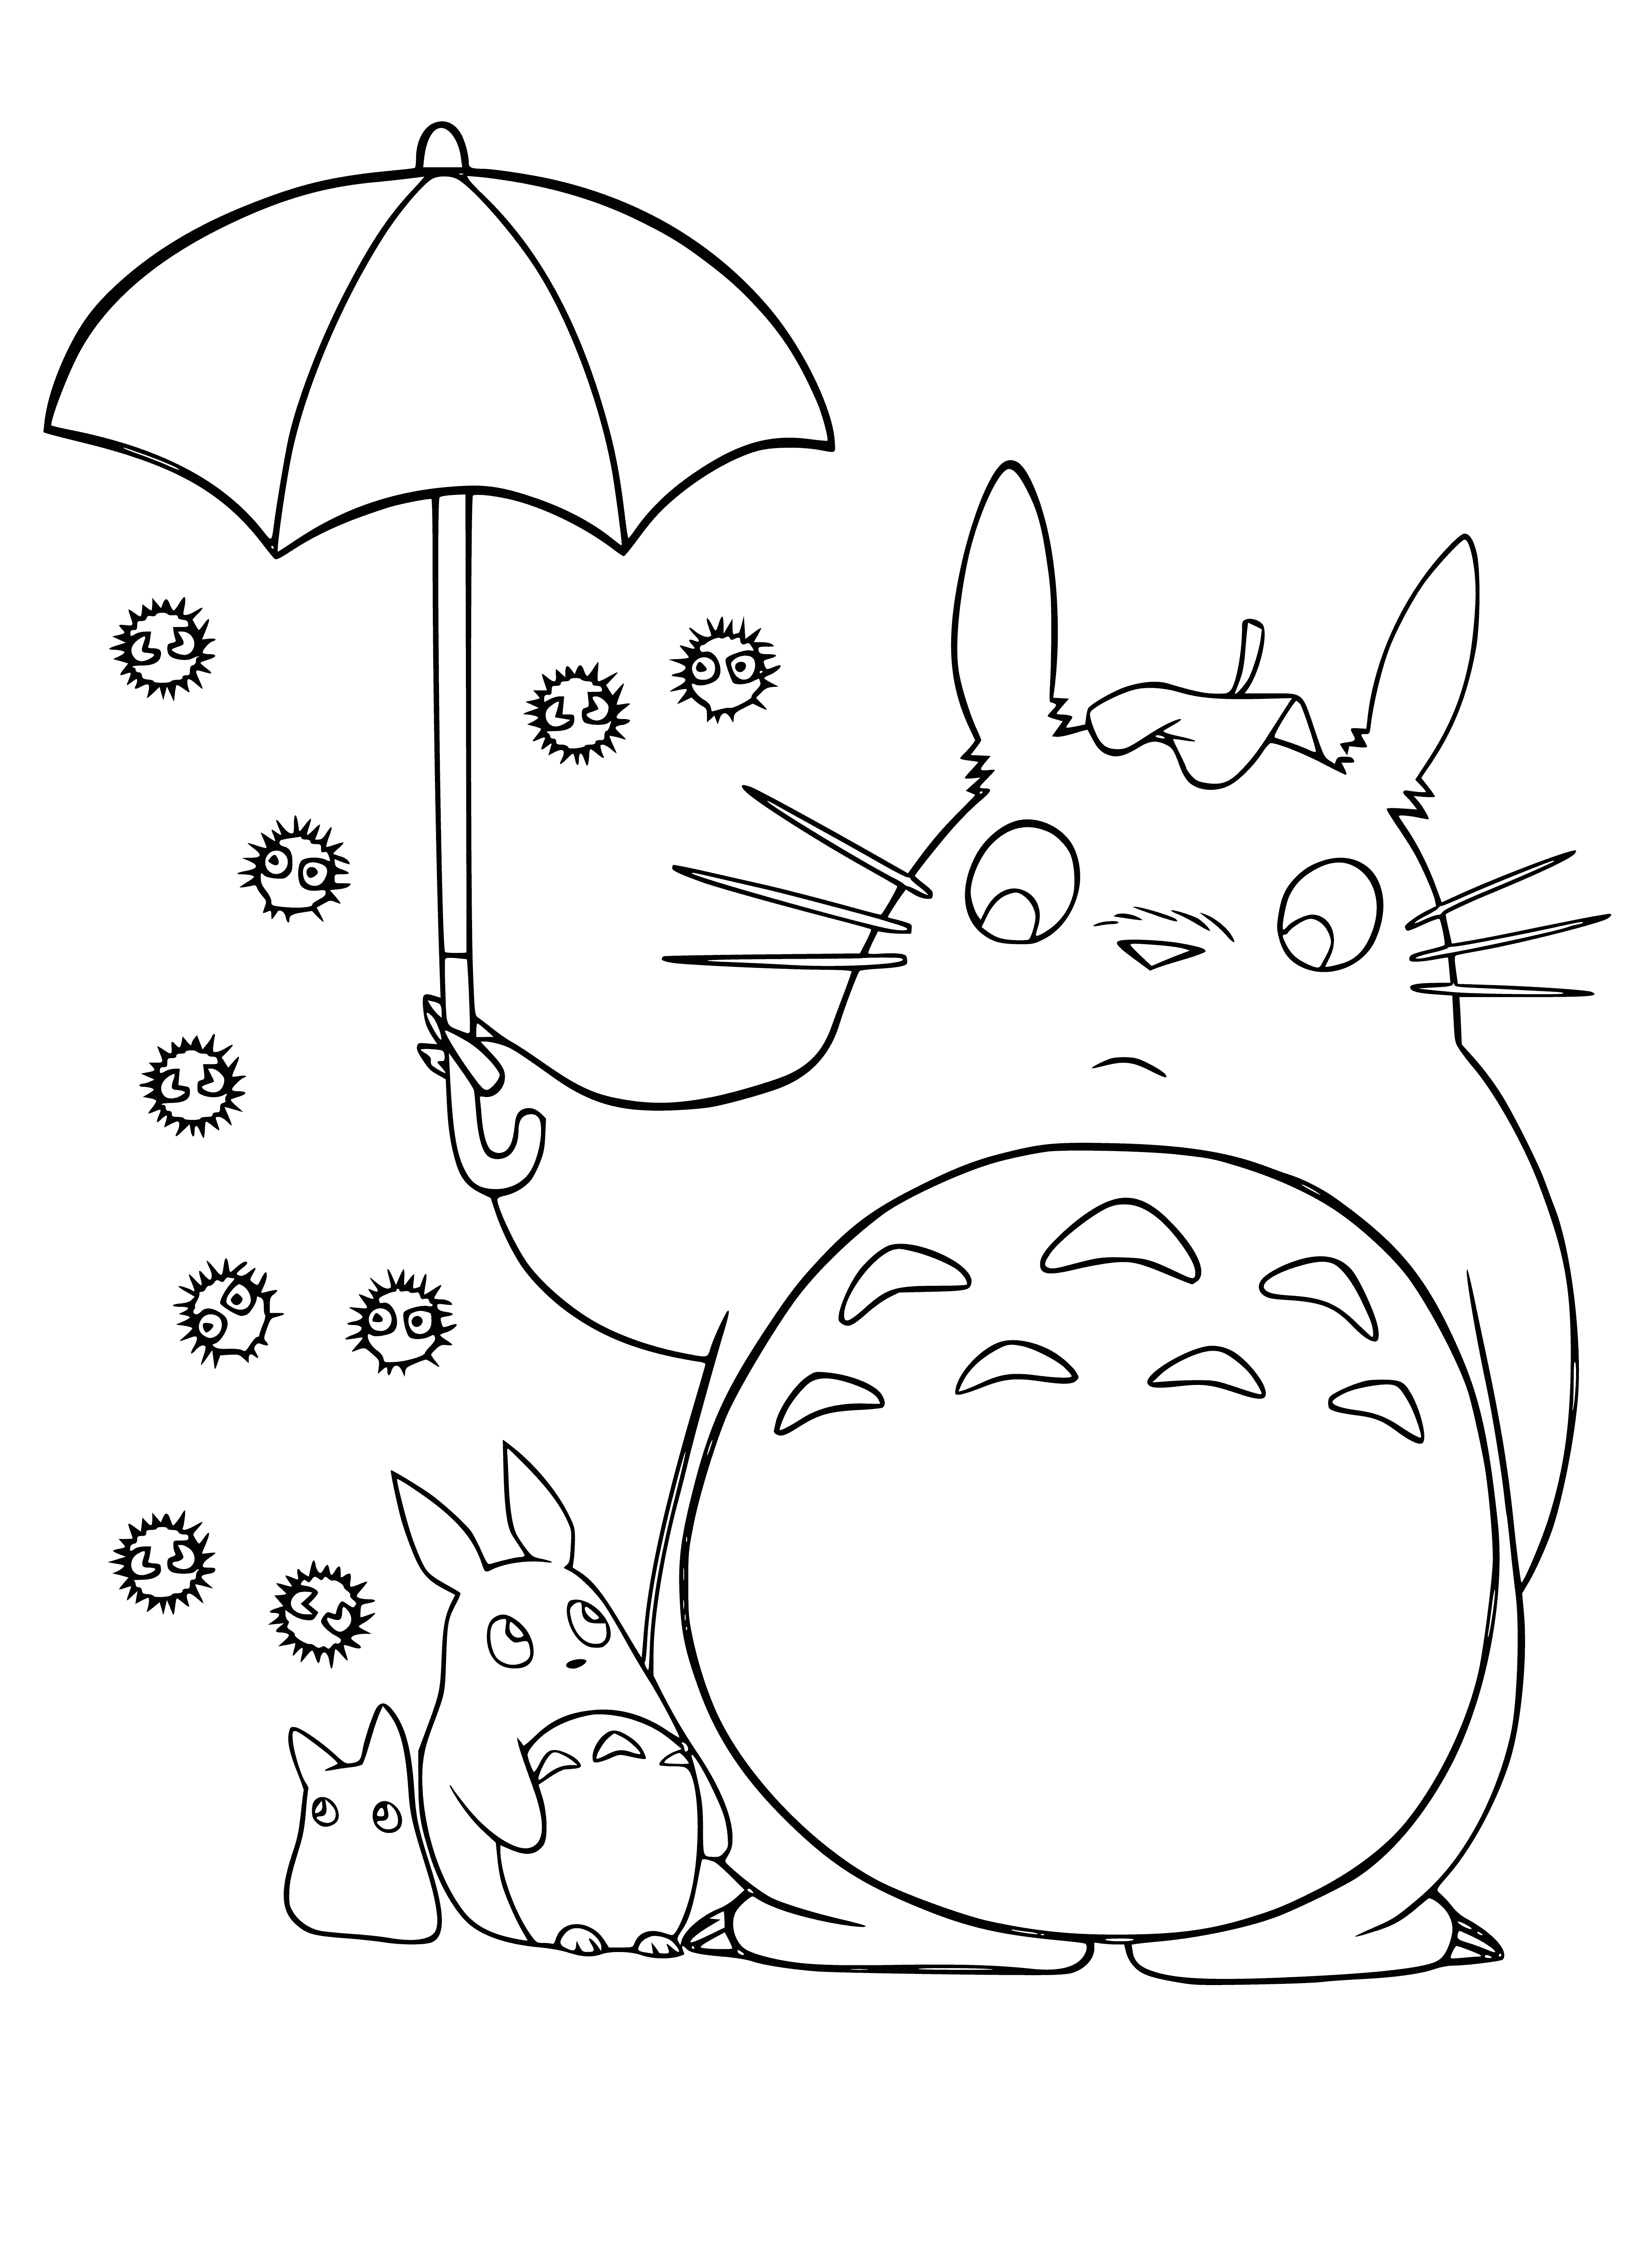 Totoro et Chernushki coloriage